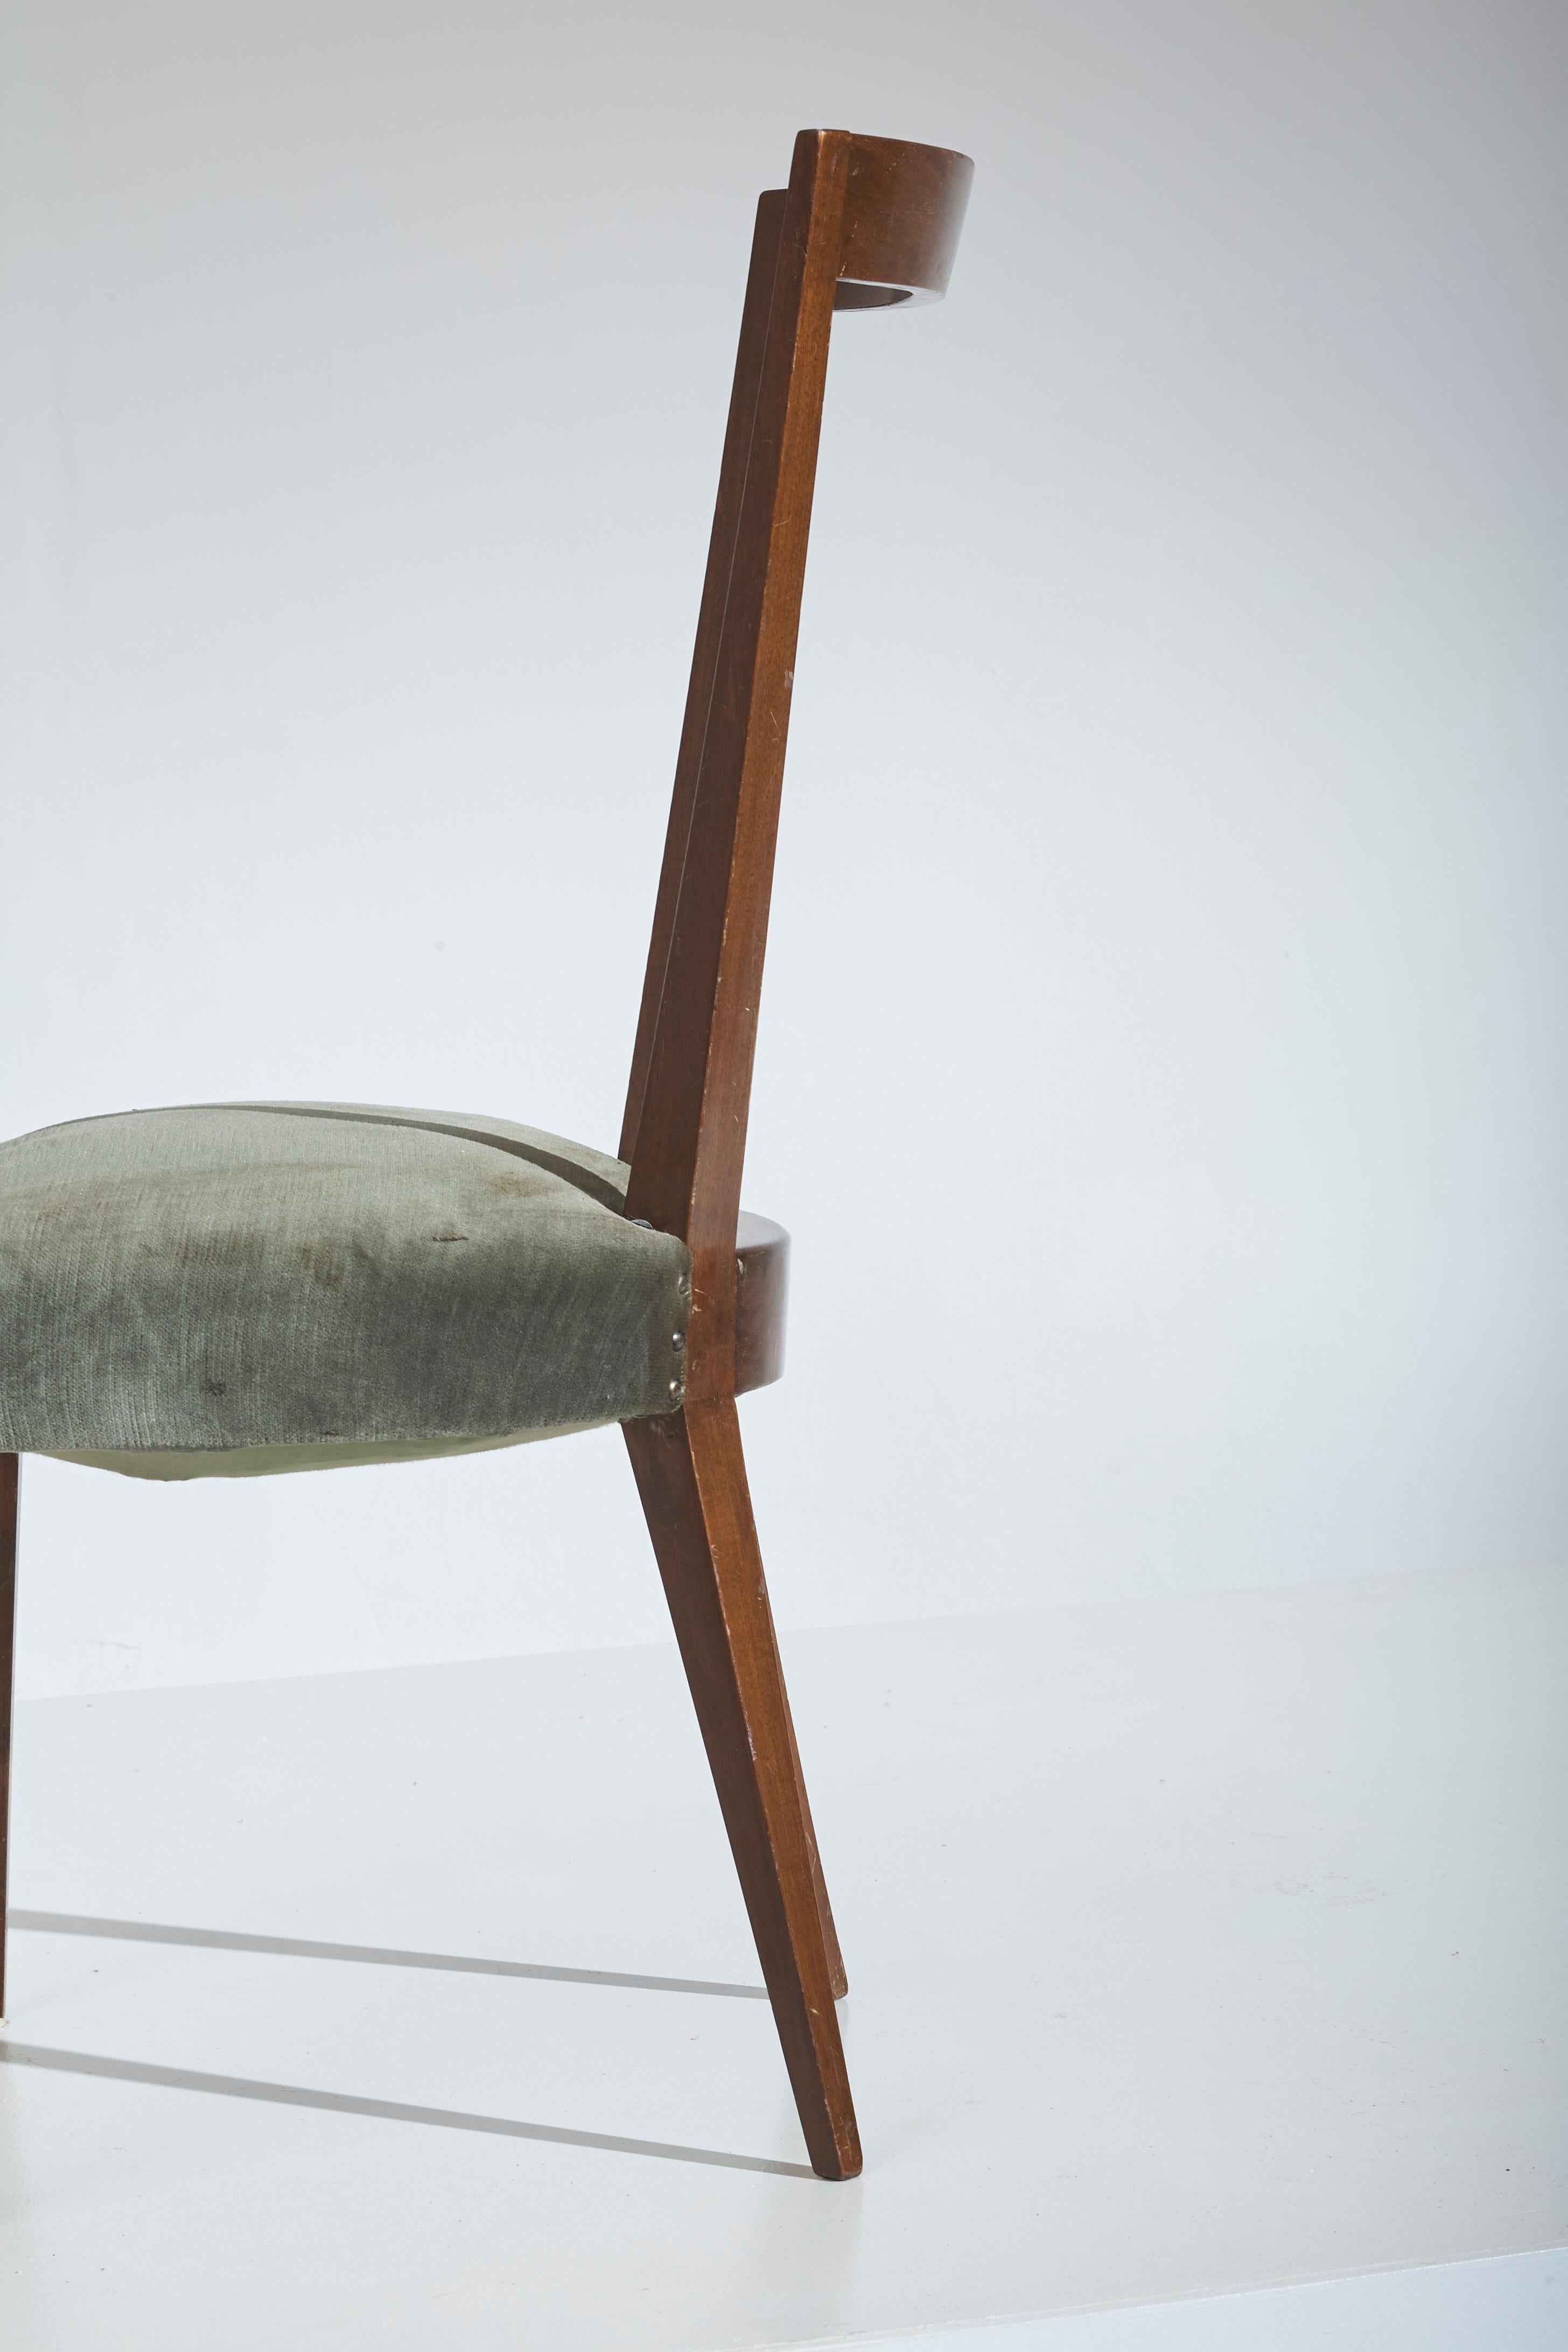 Gio Ponti for Casa E Giardino 1938 - Set of 4 Chairs in Walnut and Velvet Fabric In Good Condition In Chiavari, Liguria